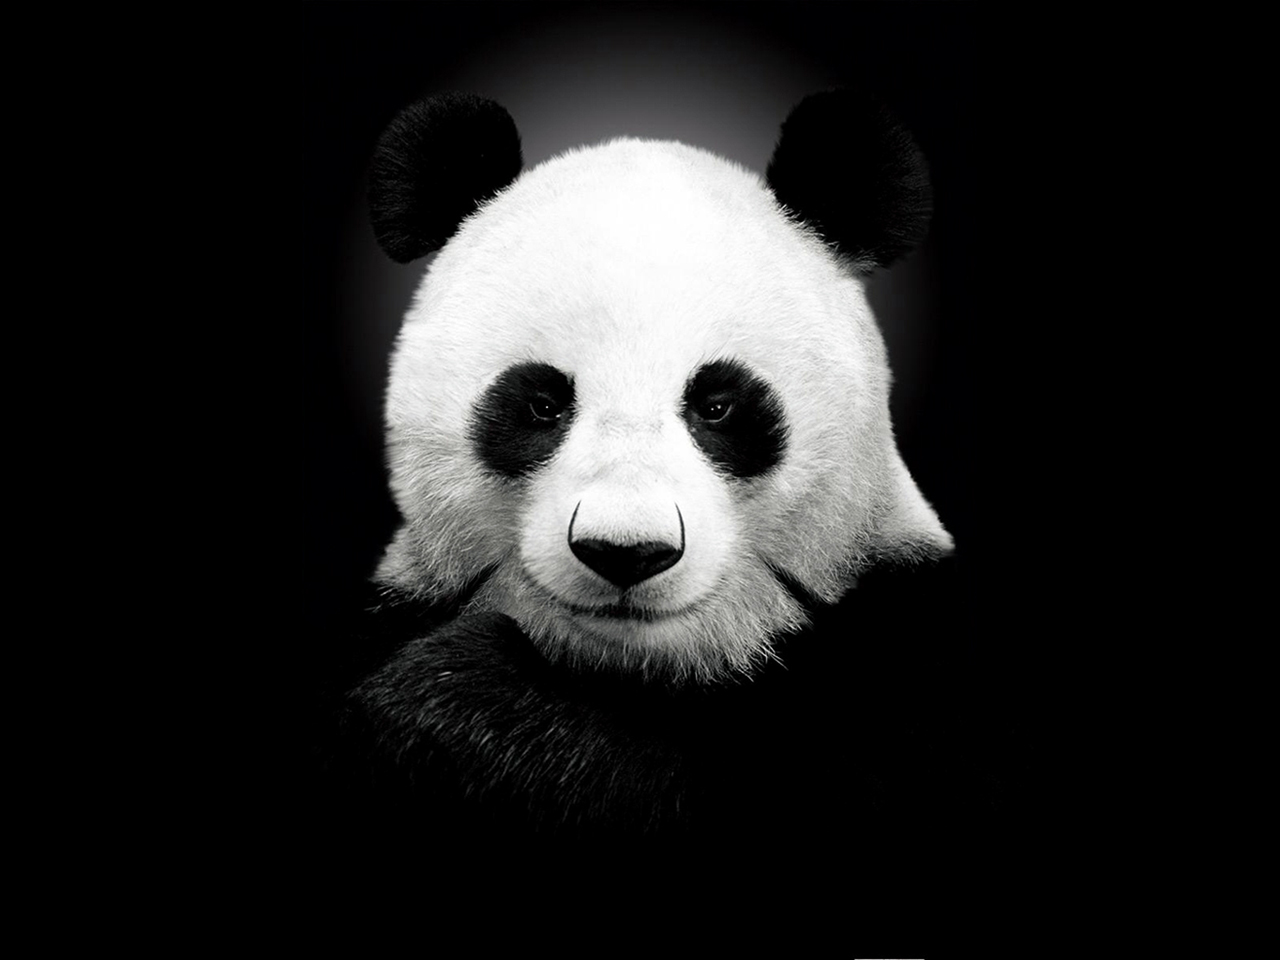 Giant Panda black and white wallpaper Black and white